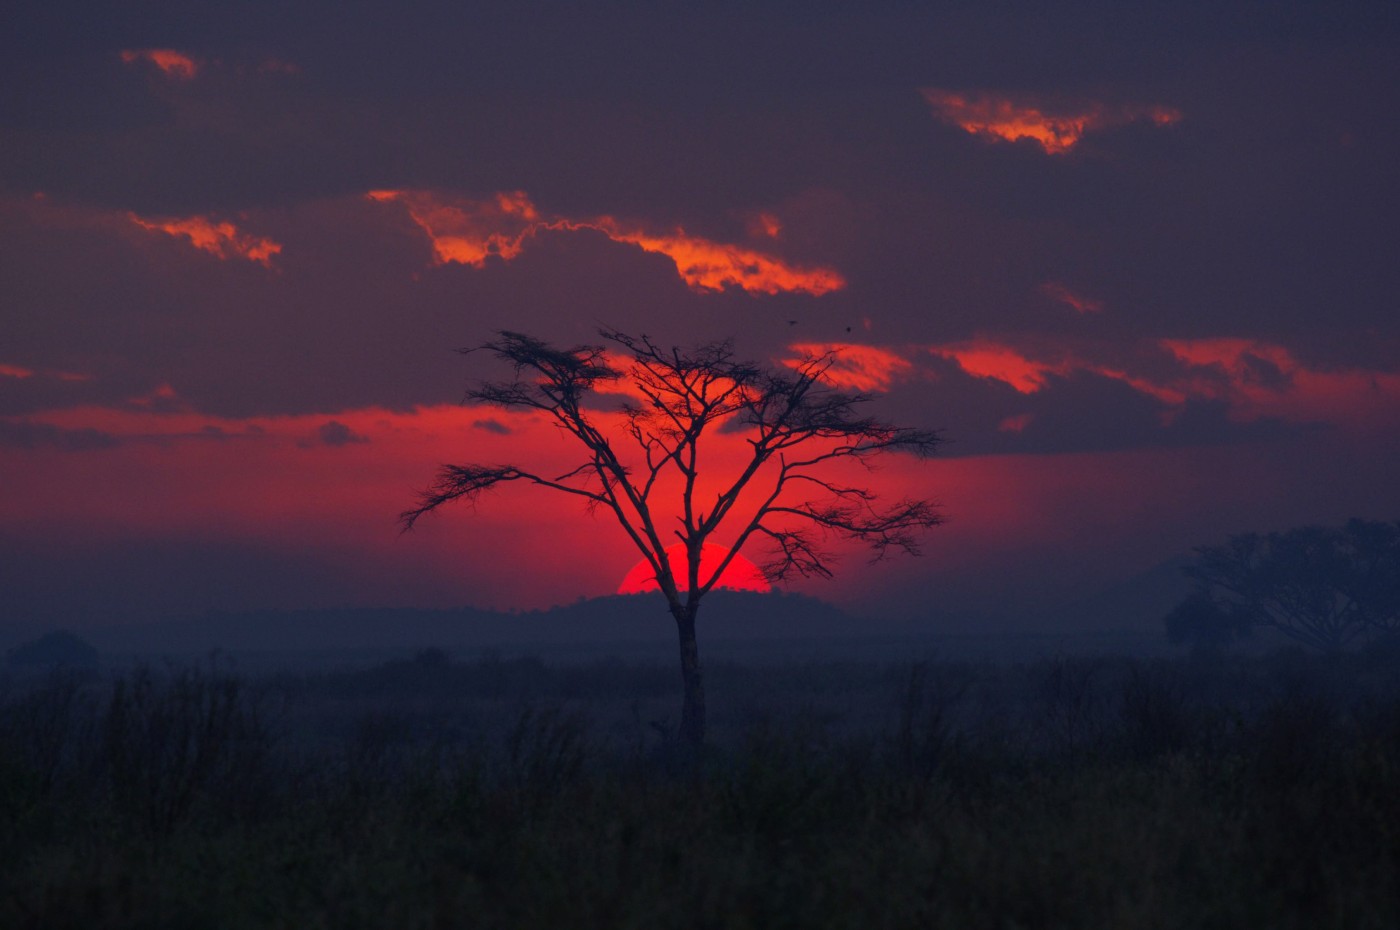 Serengeti Imax, Tanzania